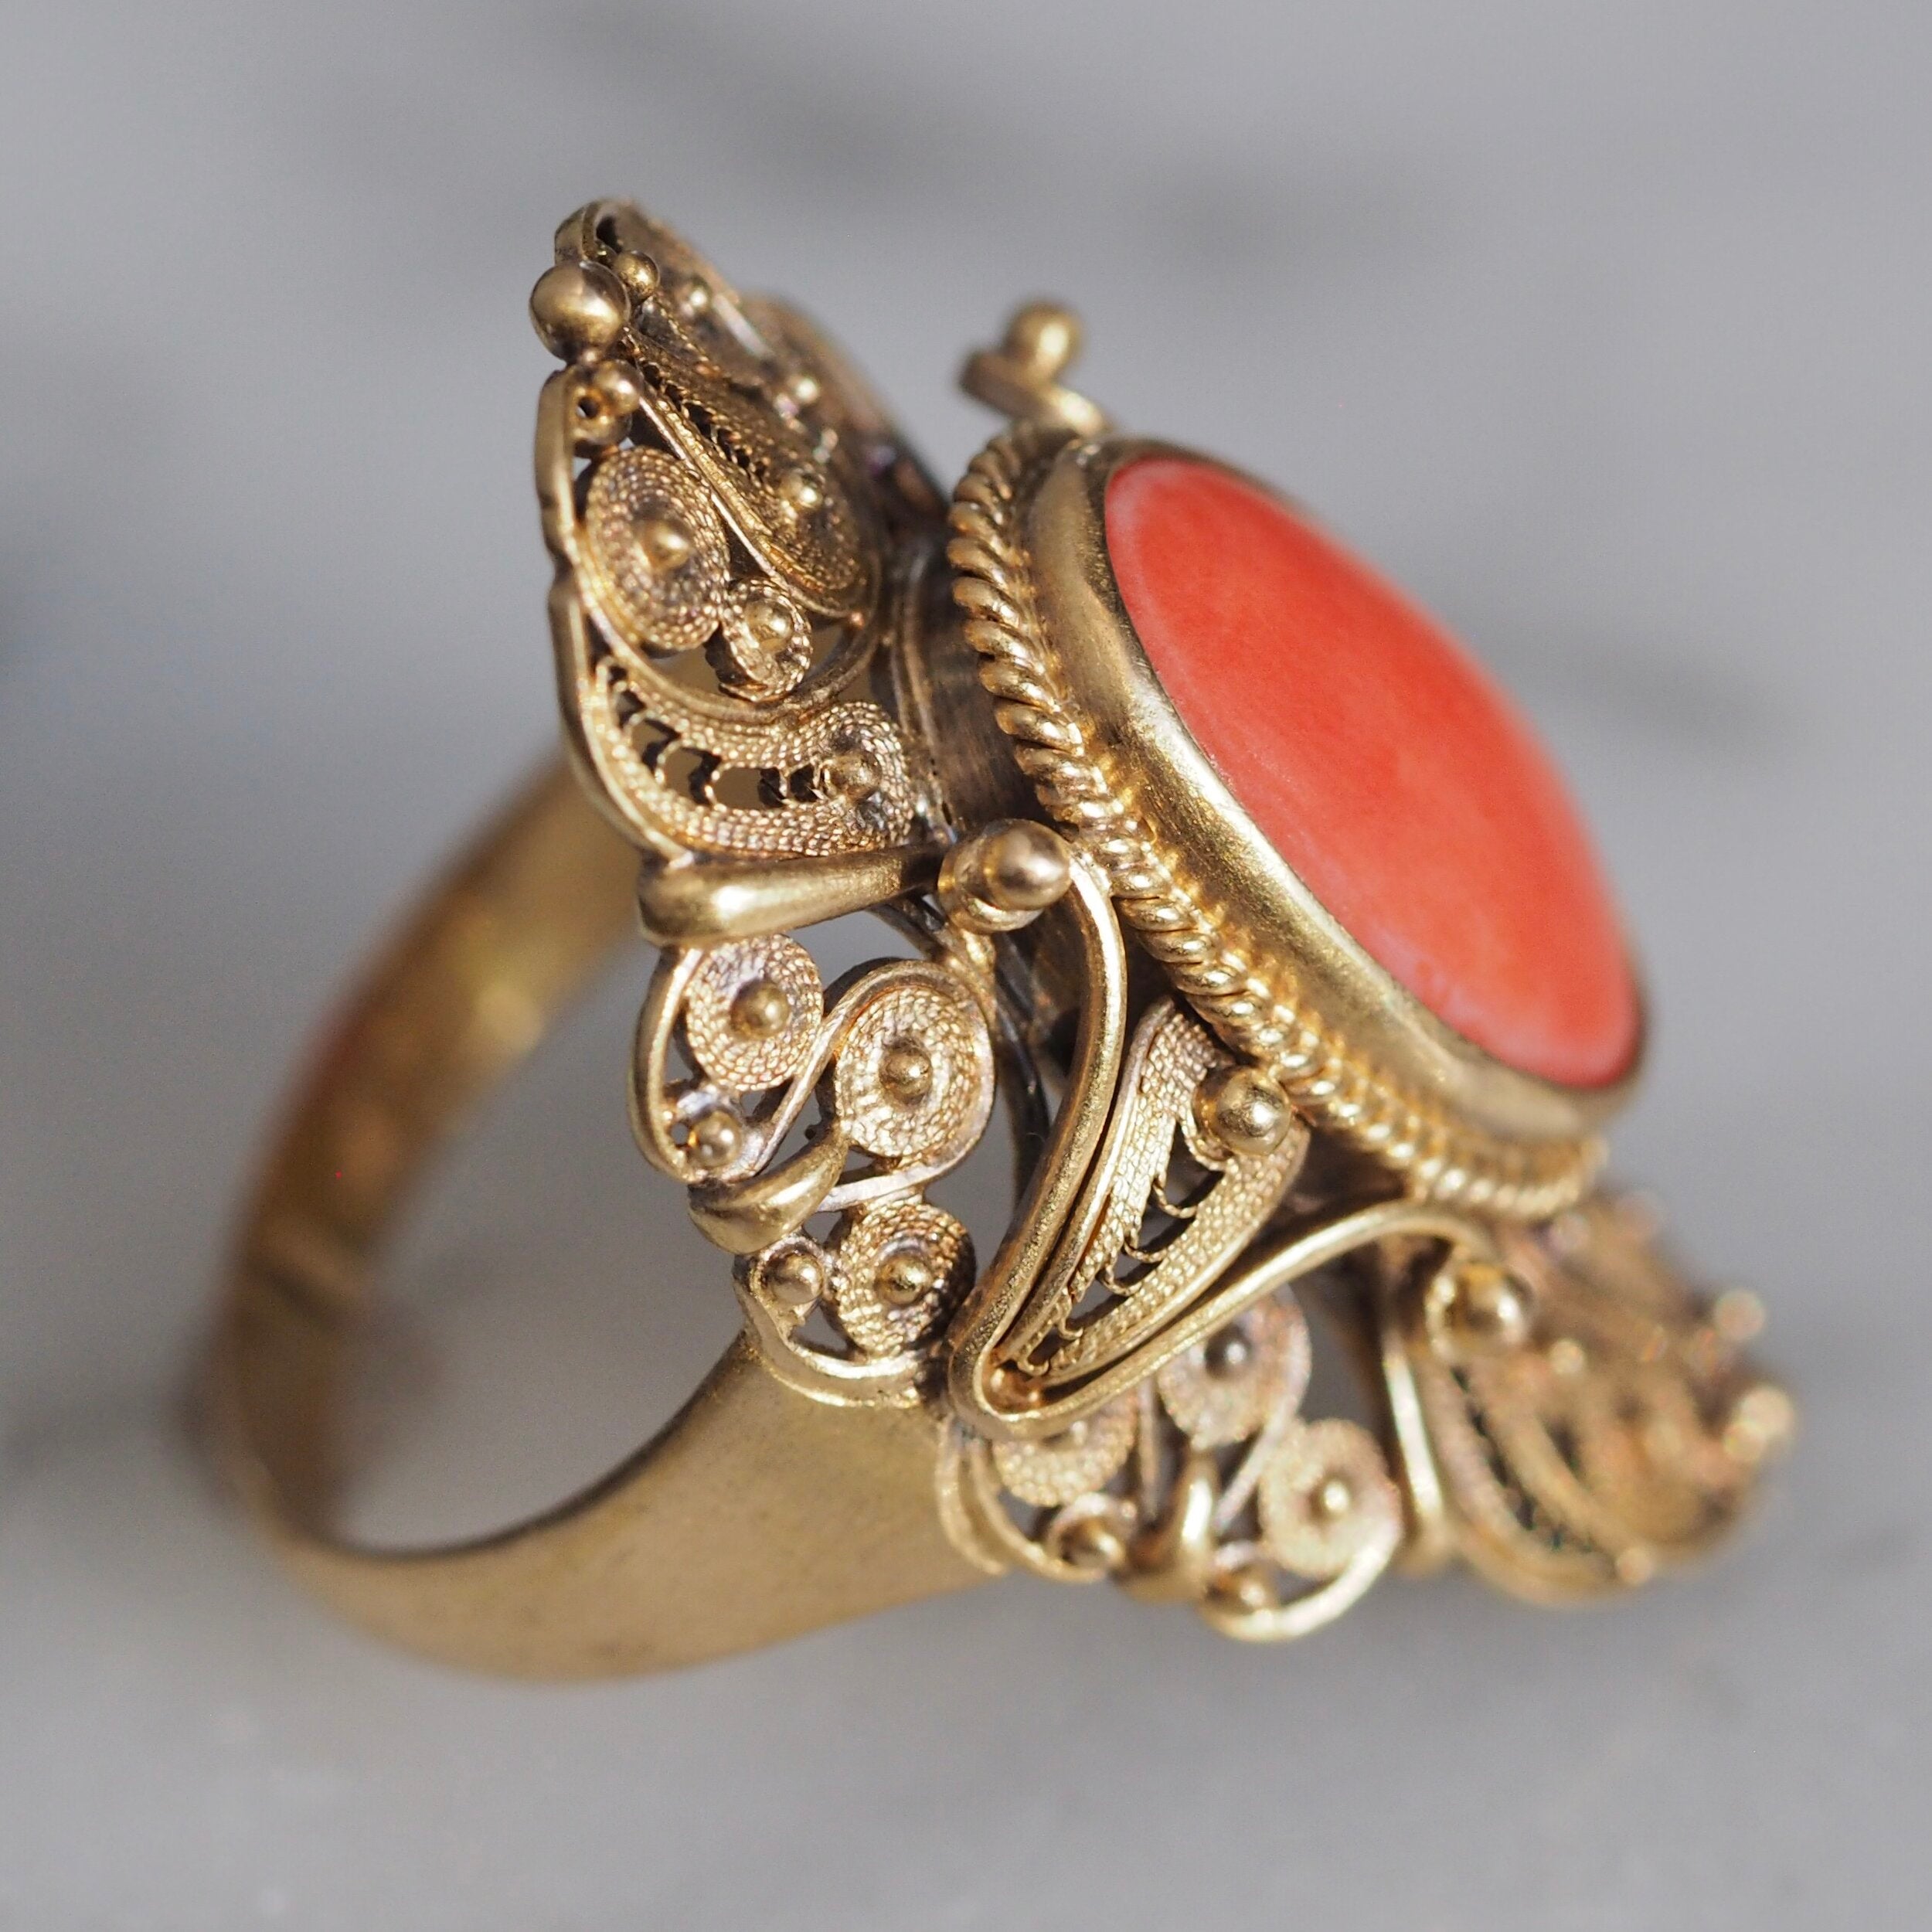 Antique 18k Gold Filigree Coral Ring